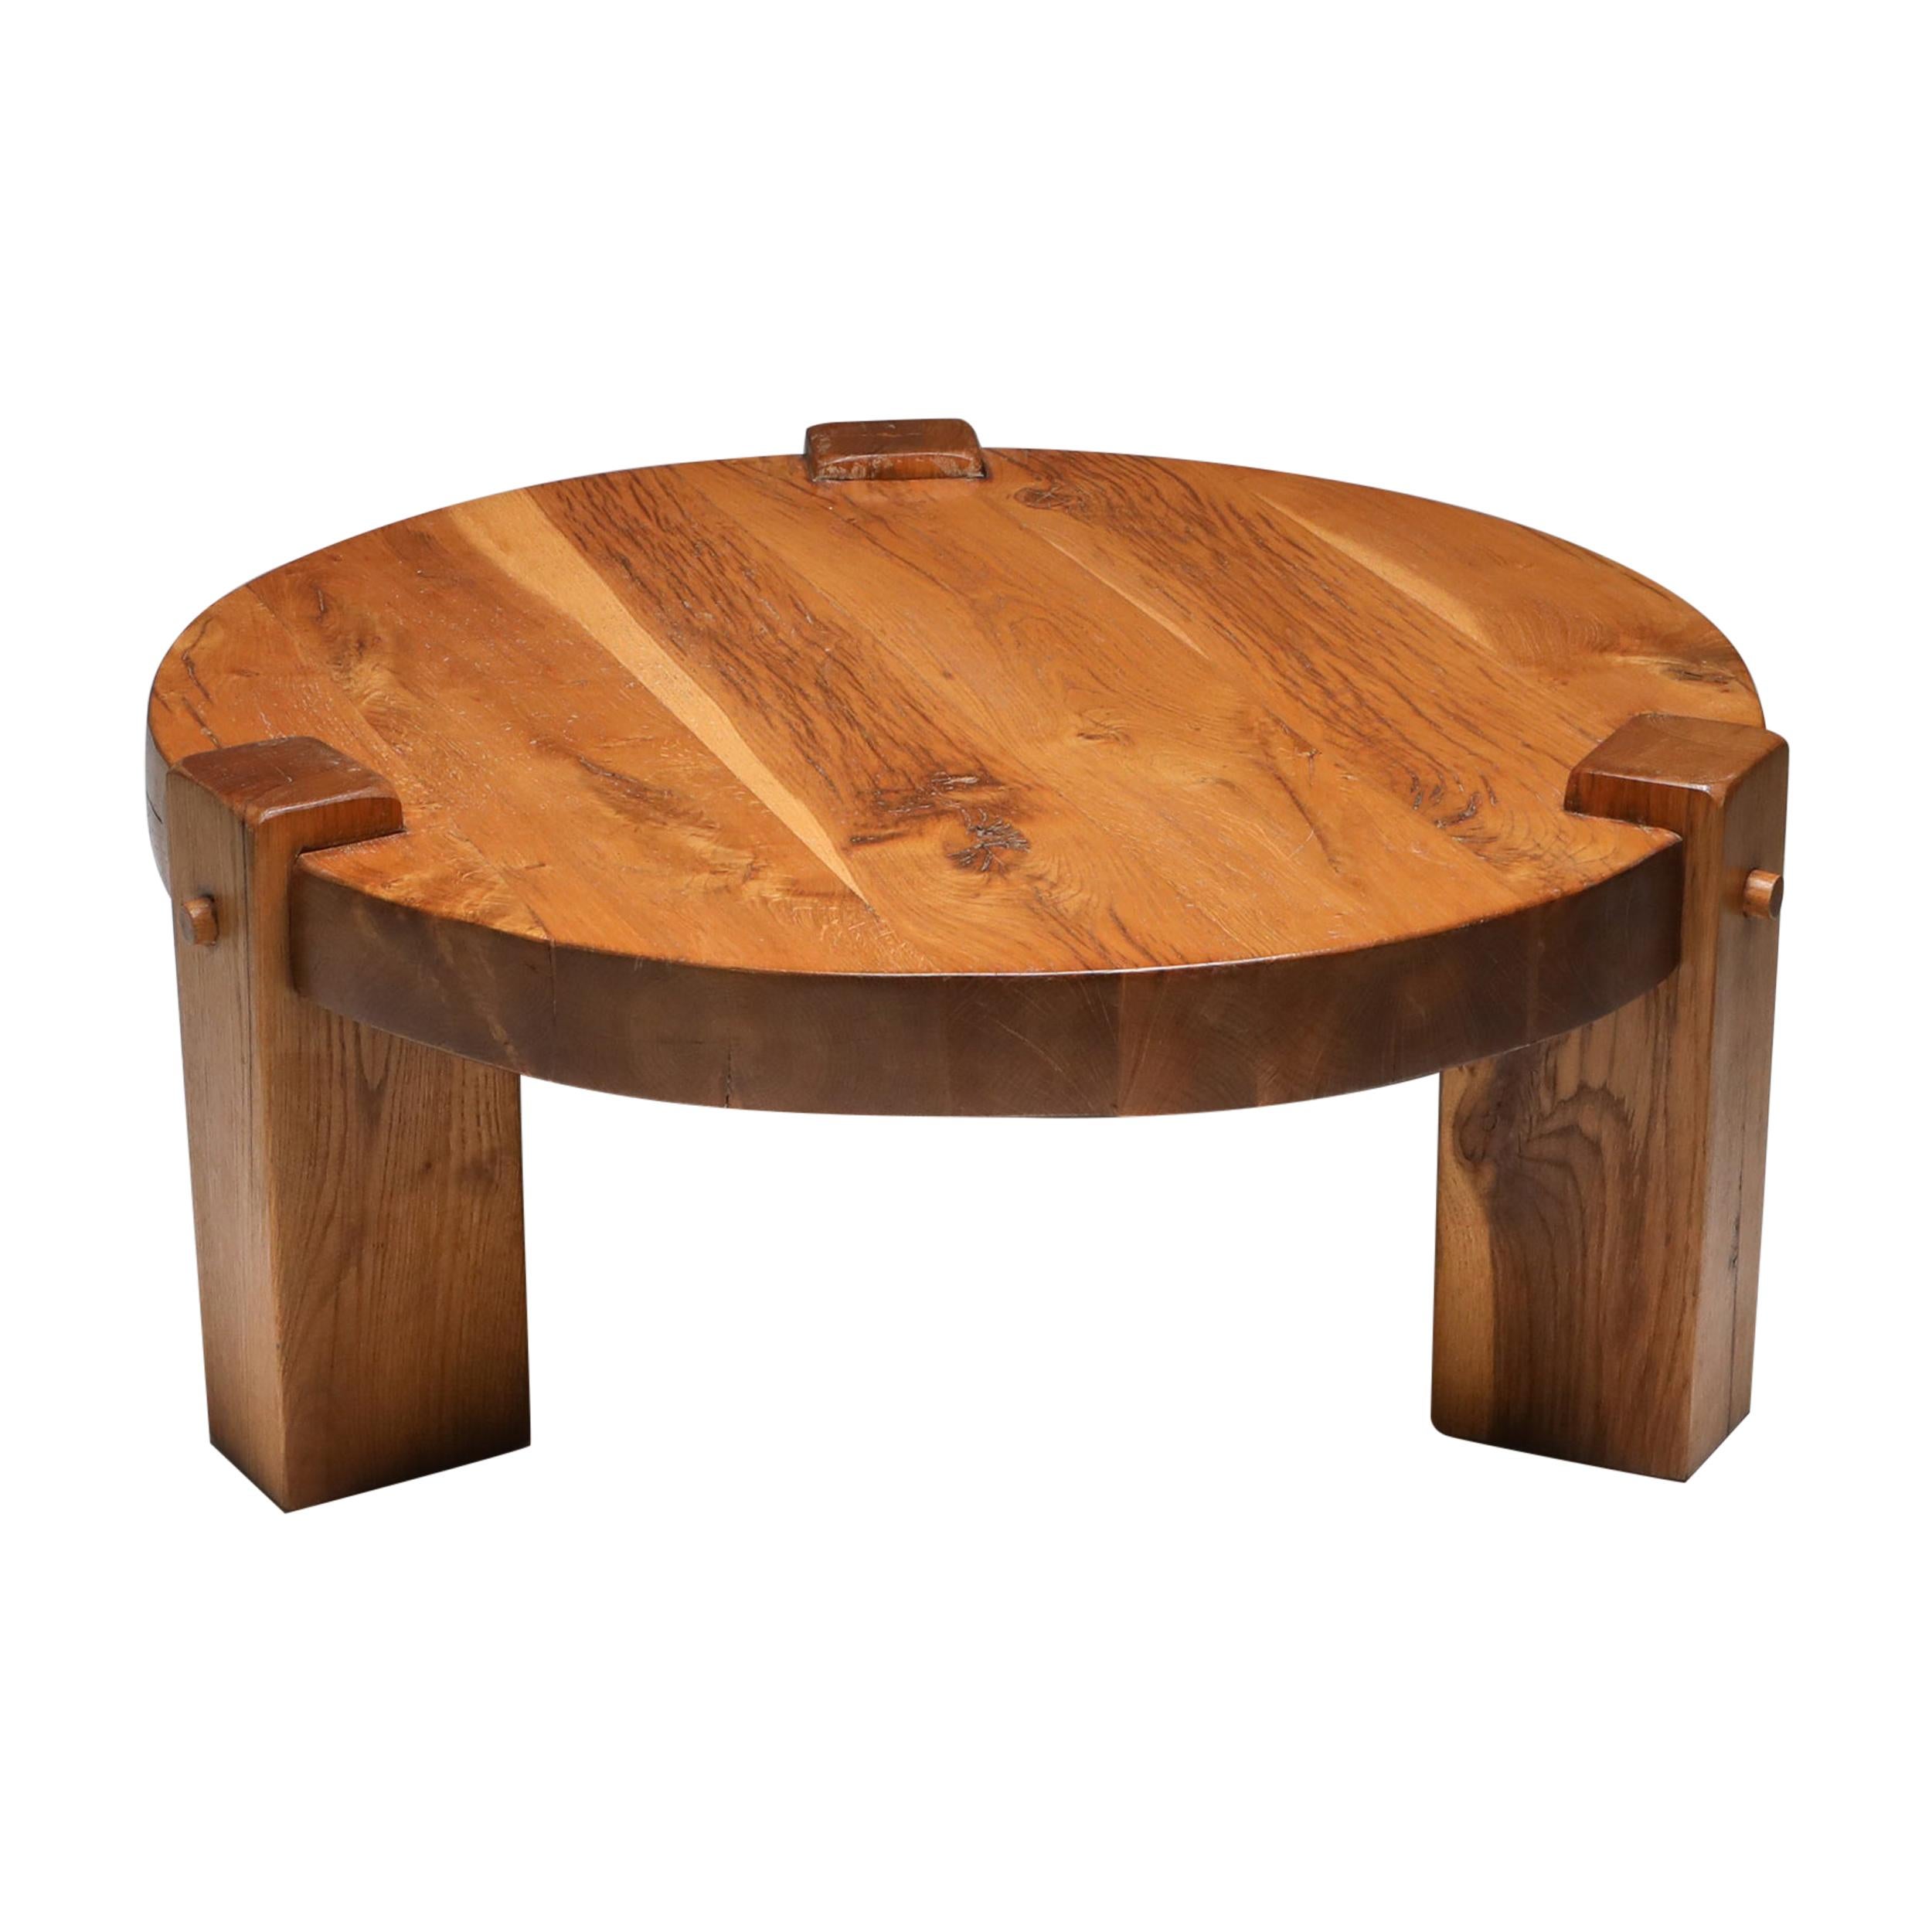 Rustic Modern Coffee Table in Solid Oak